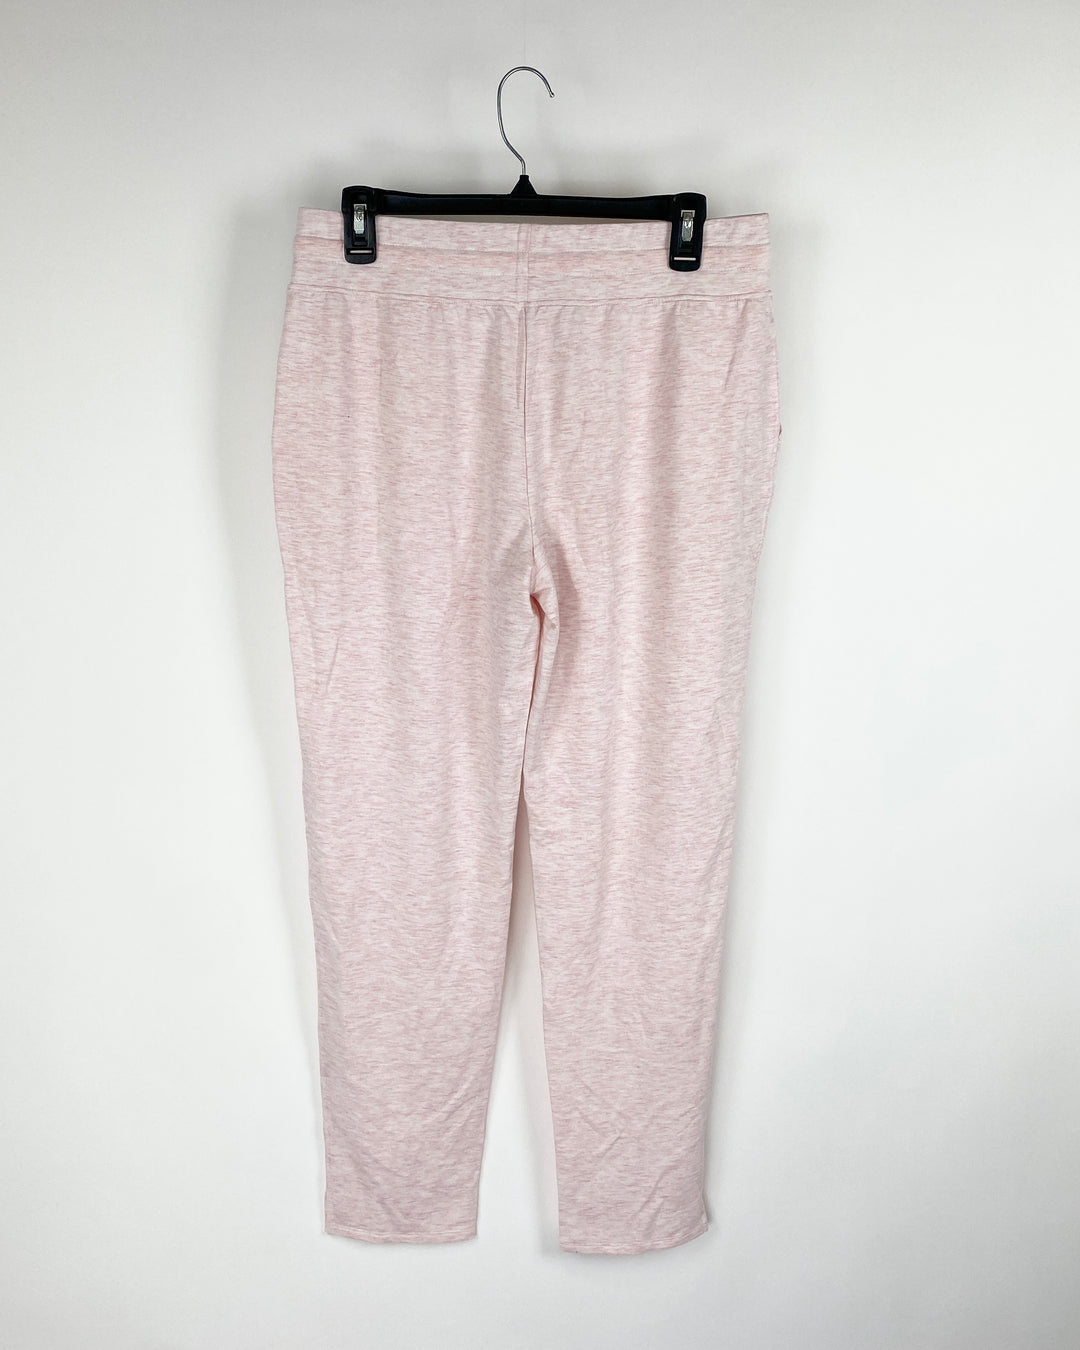 Pink Heathered Sweatpants - Small